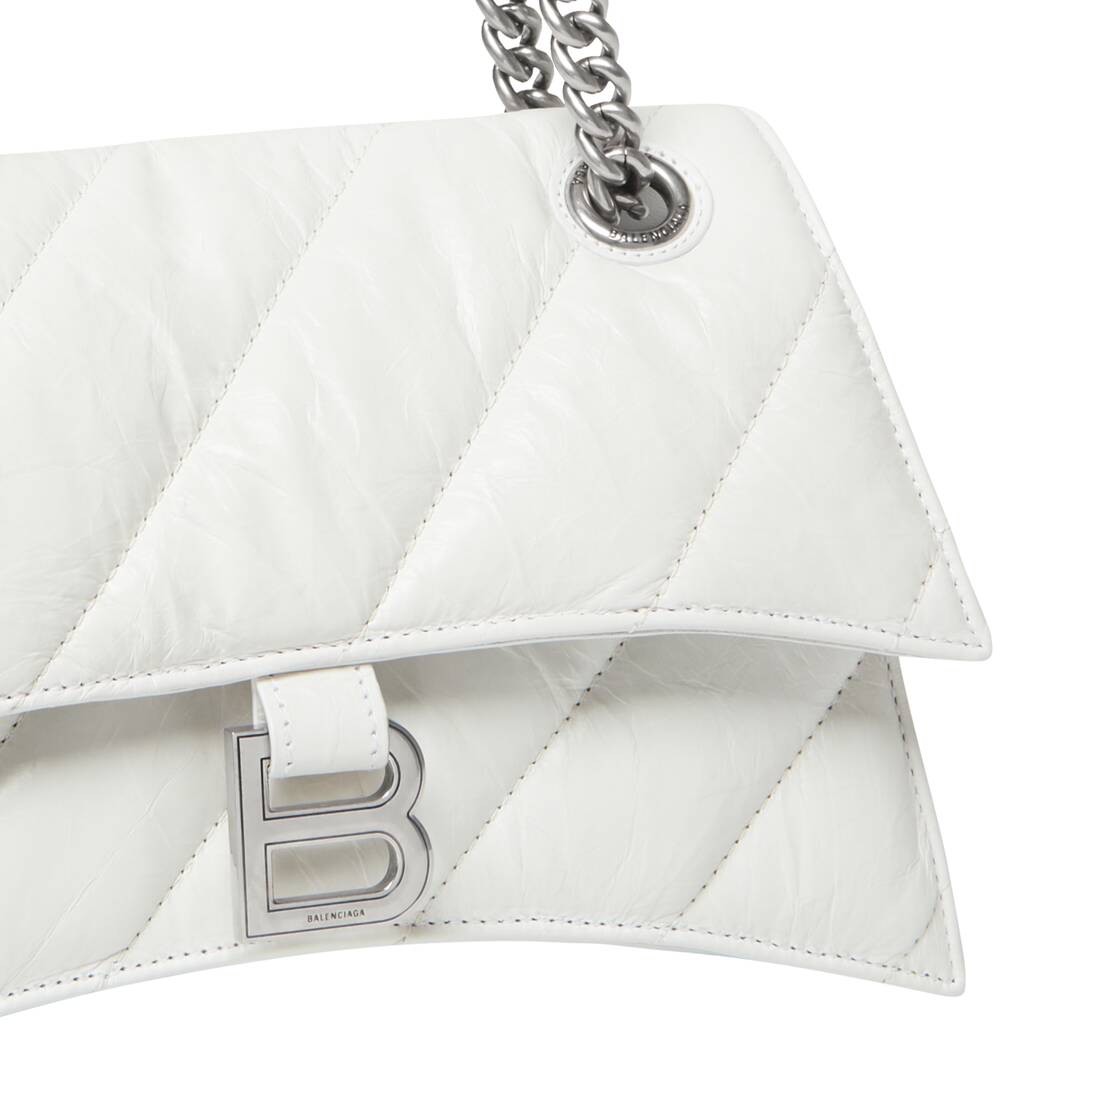 Hourglass S Bag  Balenciaga  White  Leather